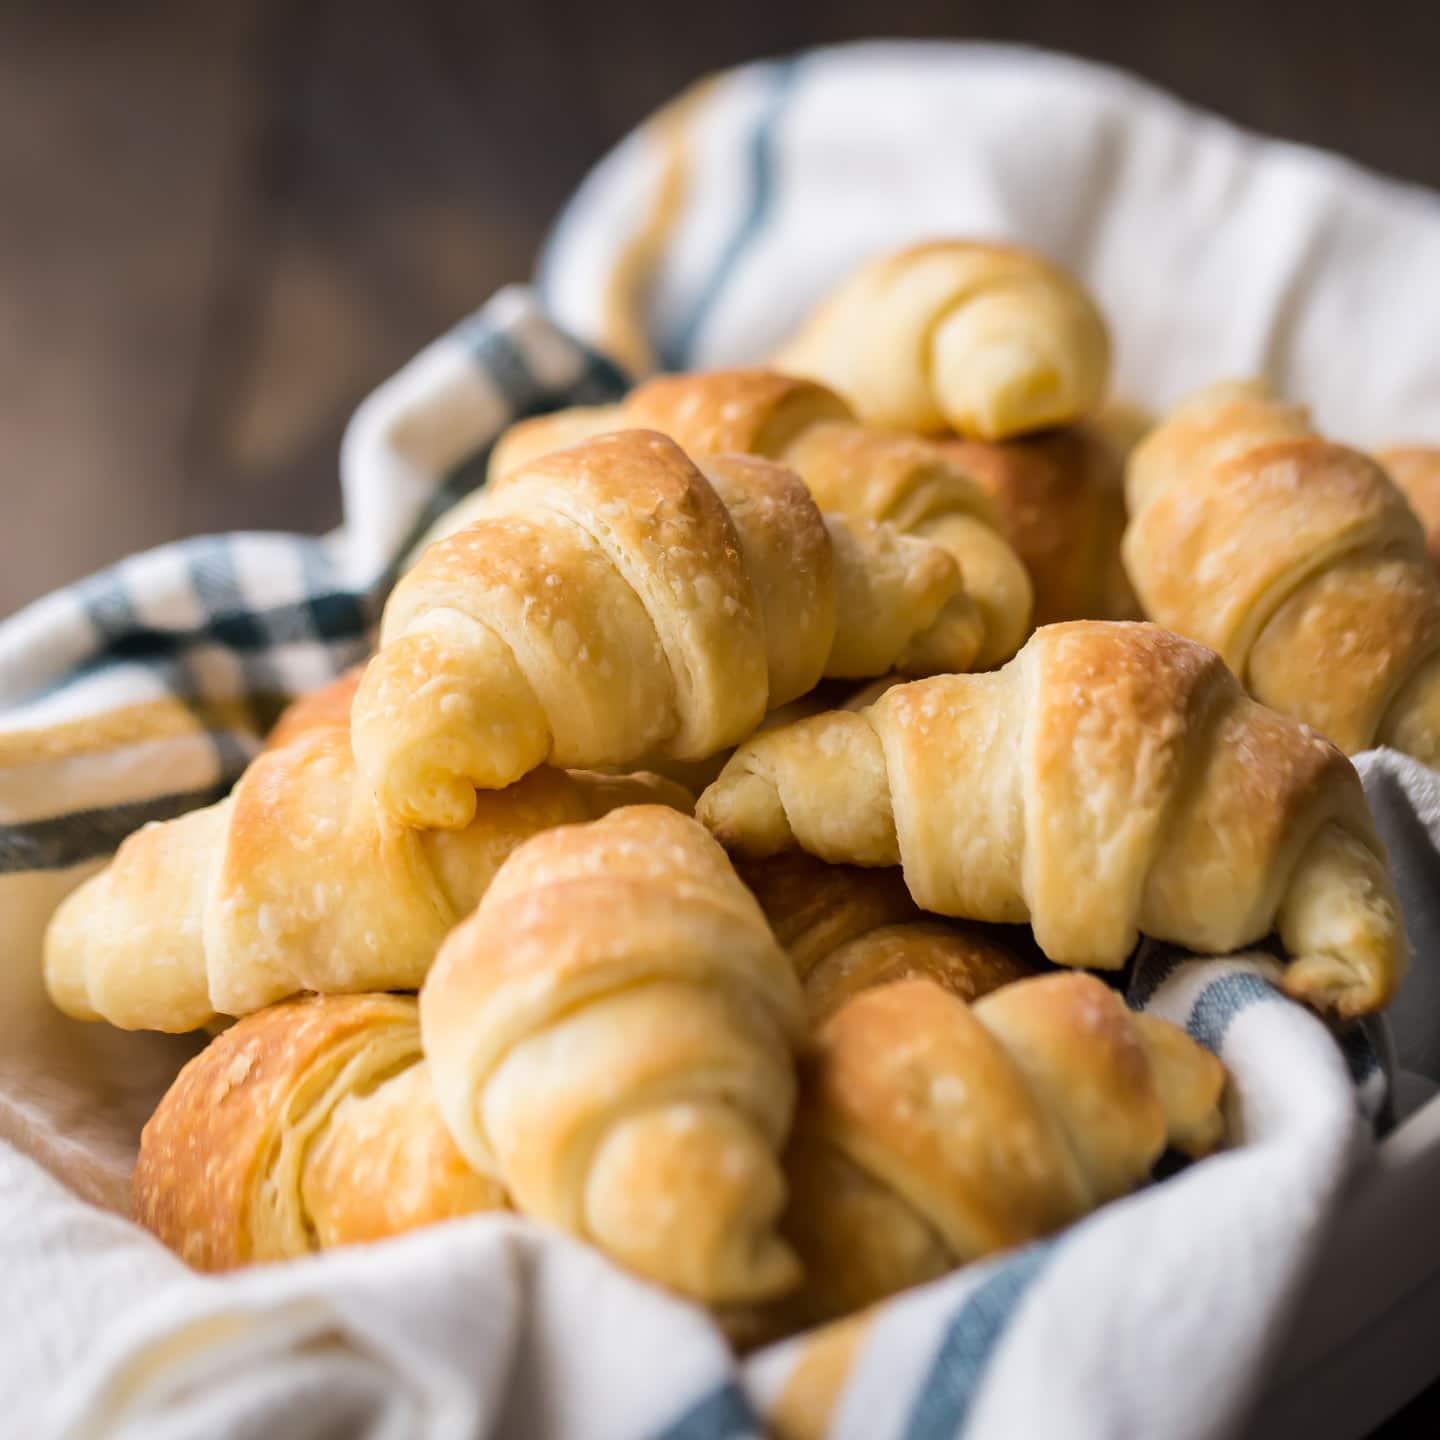 https://bakingamoment.com/wp-content/uploads/2018/11/IMG_1054-best-homemade-crescent-rolls-recipe-square.jpg